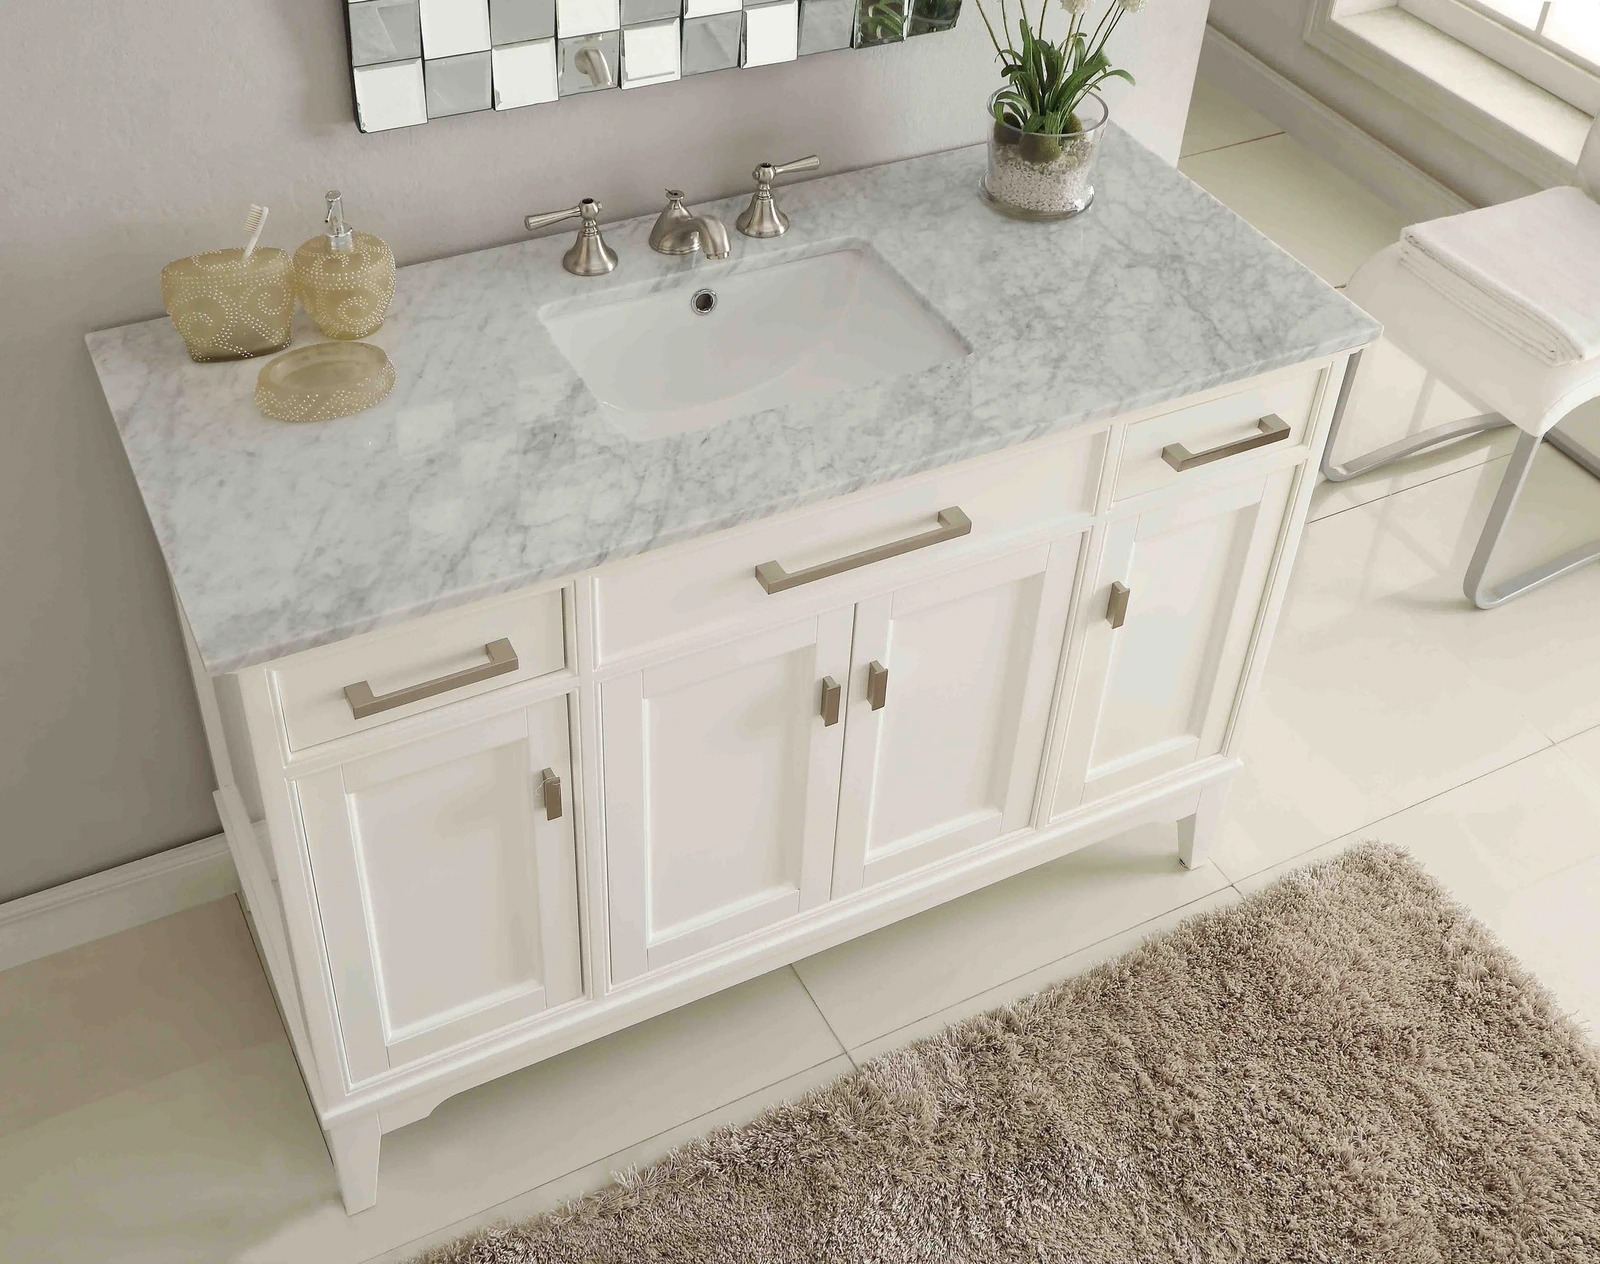 Is Carrara Marble Good For Bathroom Vanity